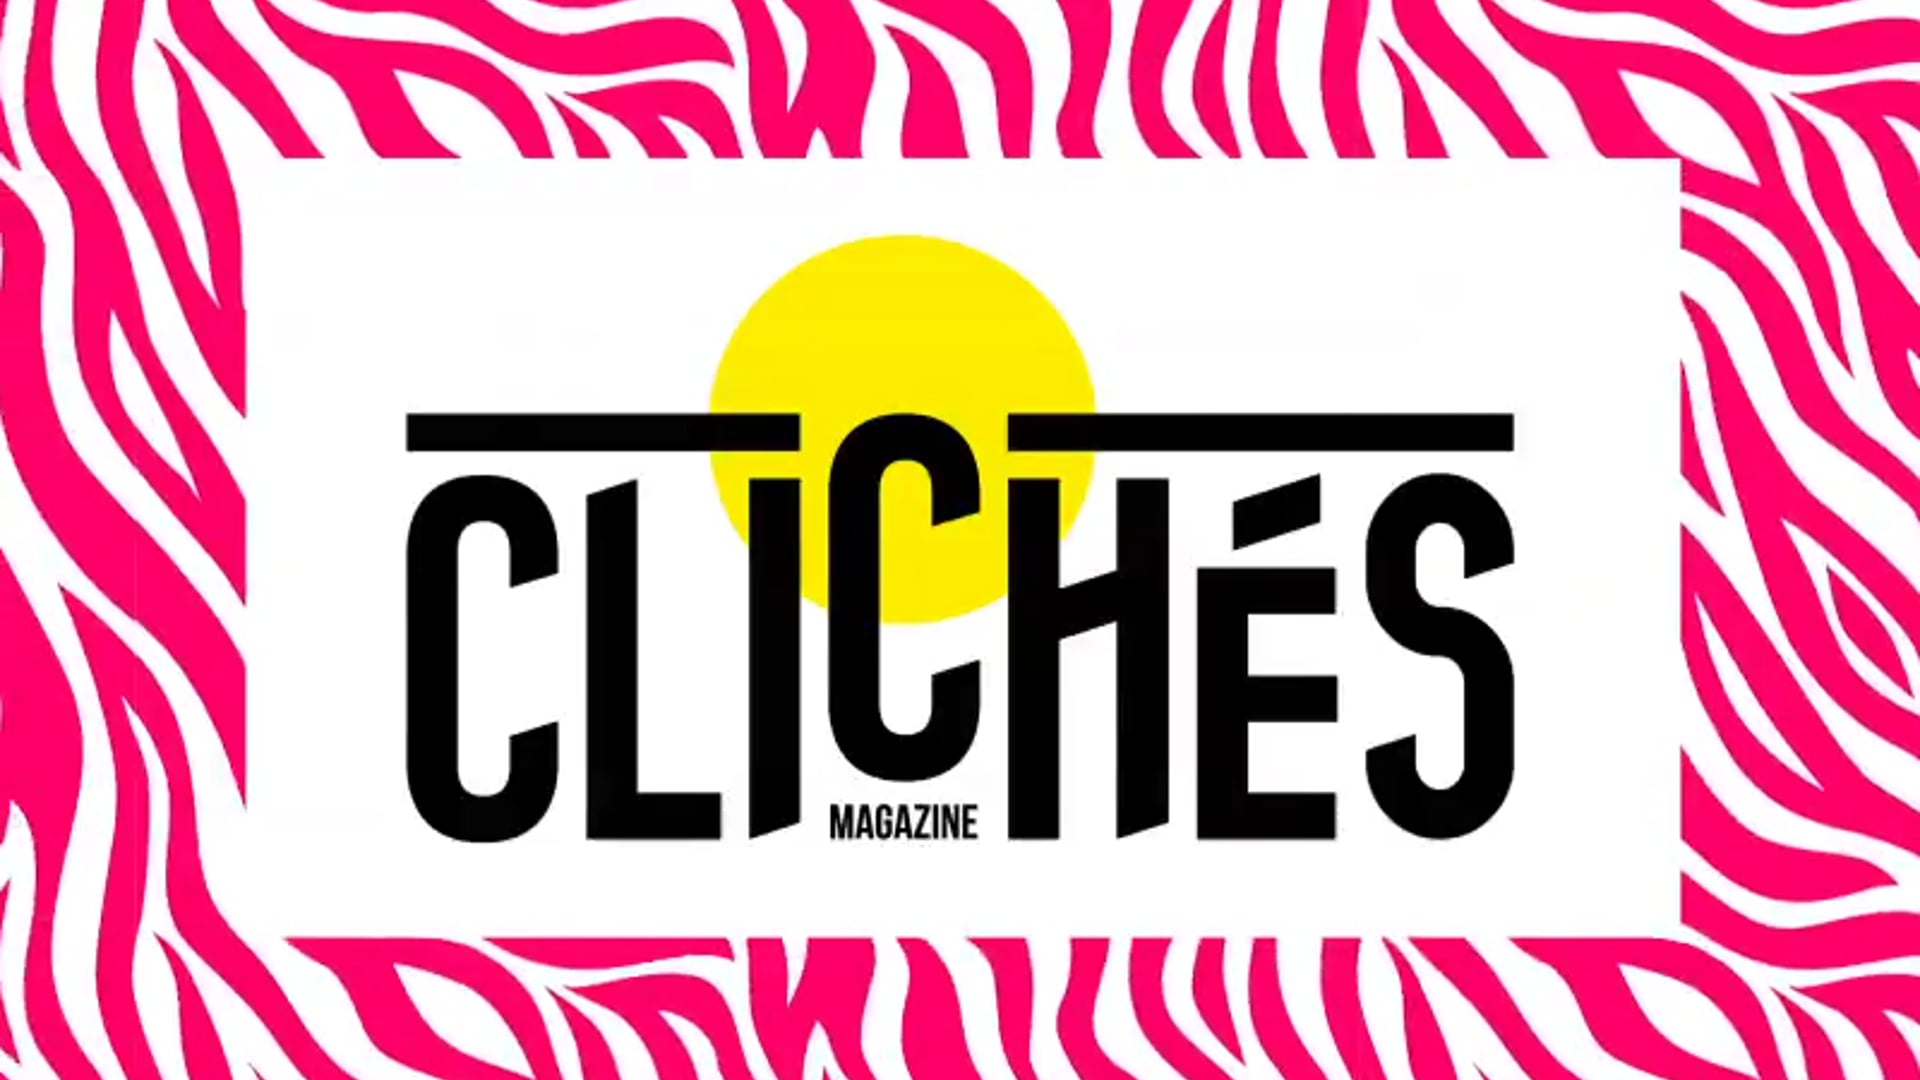 Clichés Magazine's logo - motion design for social networks